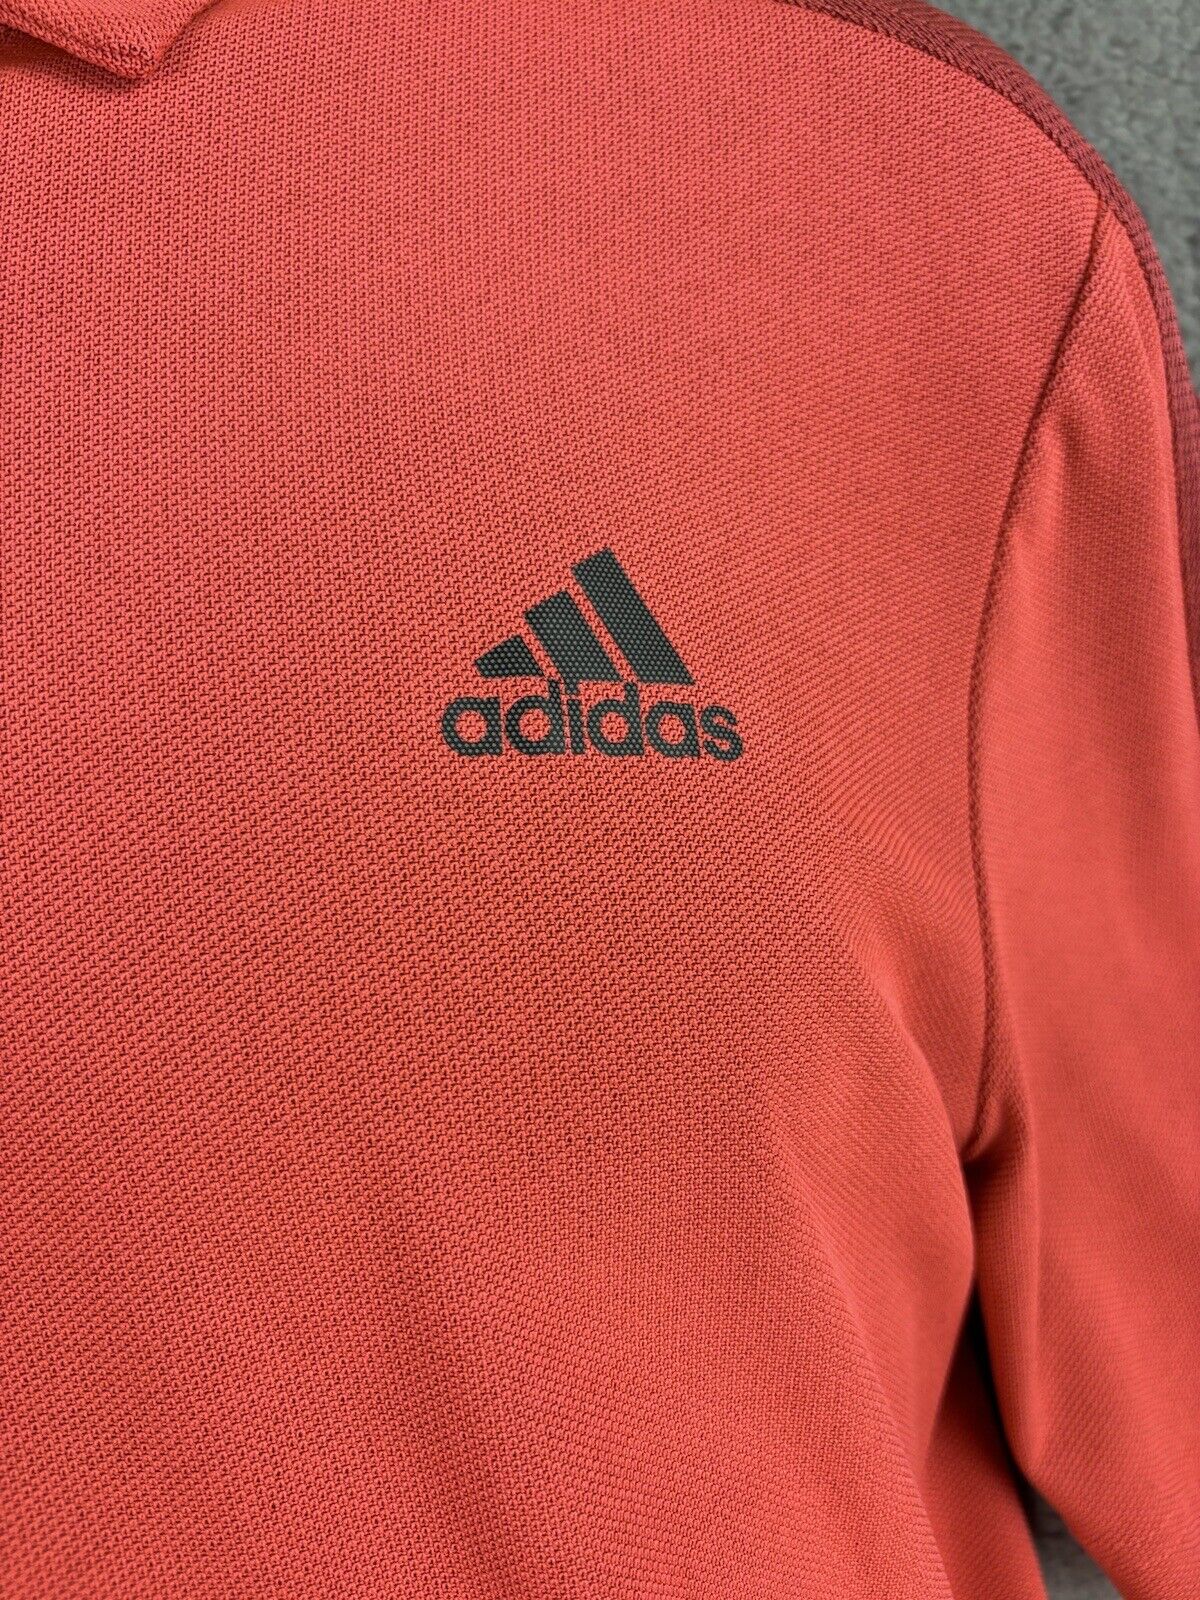 Adidas Men’s red polo shirt short sleeve red Aero… - image 3